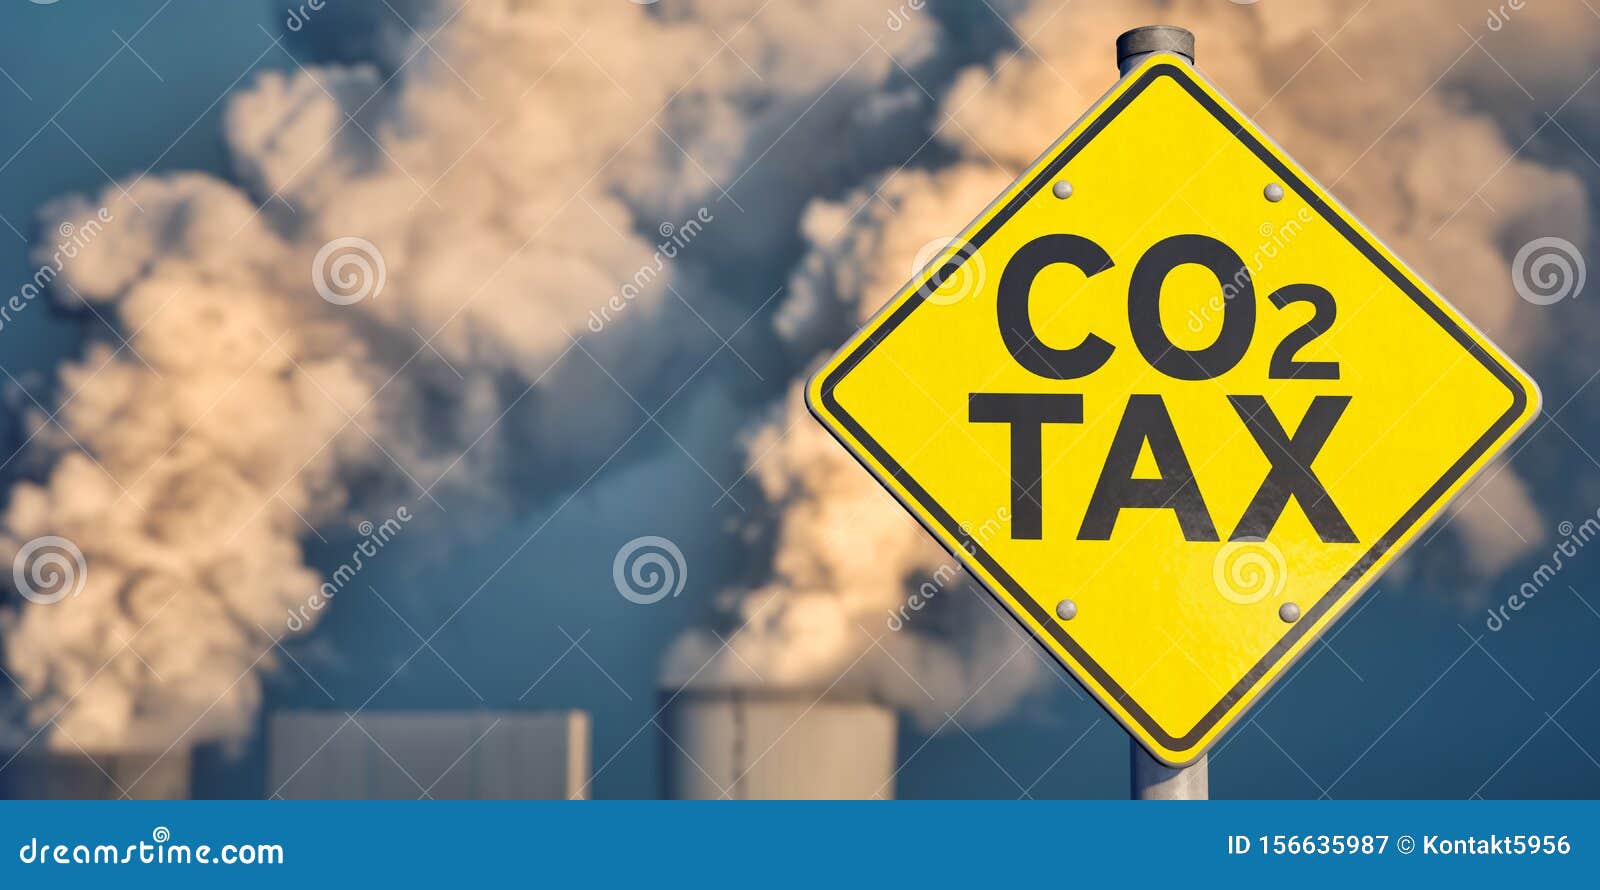 traffic sign co2 tax